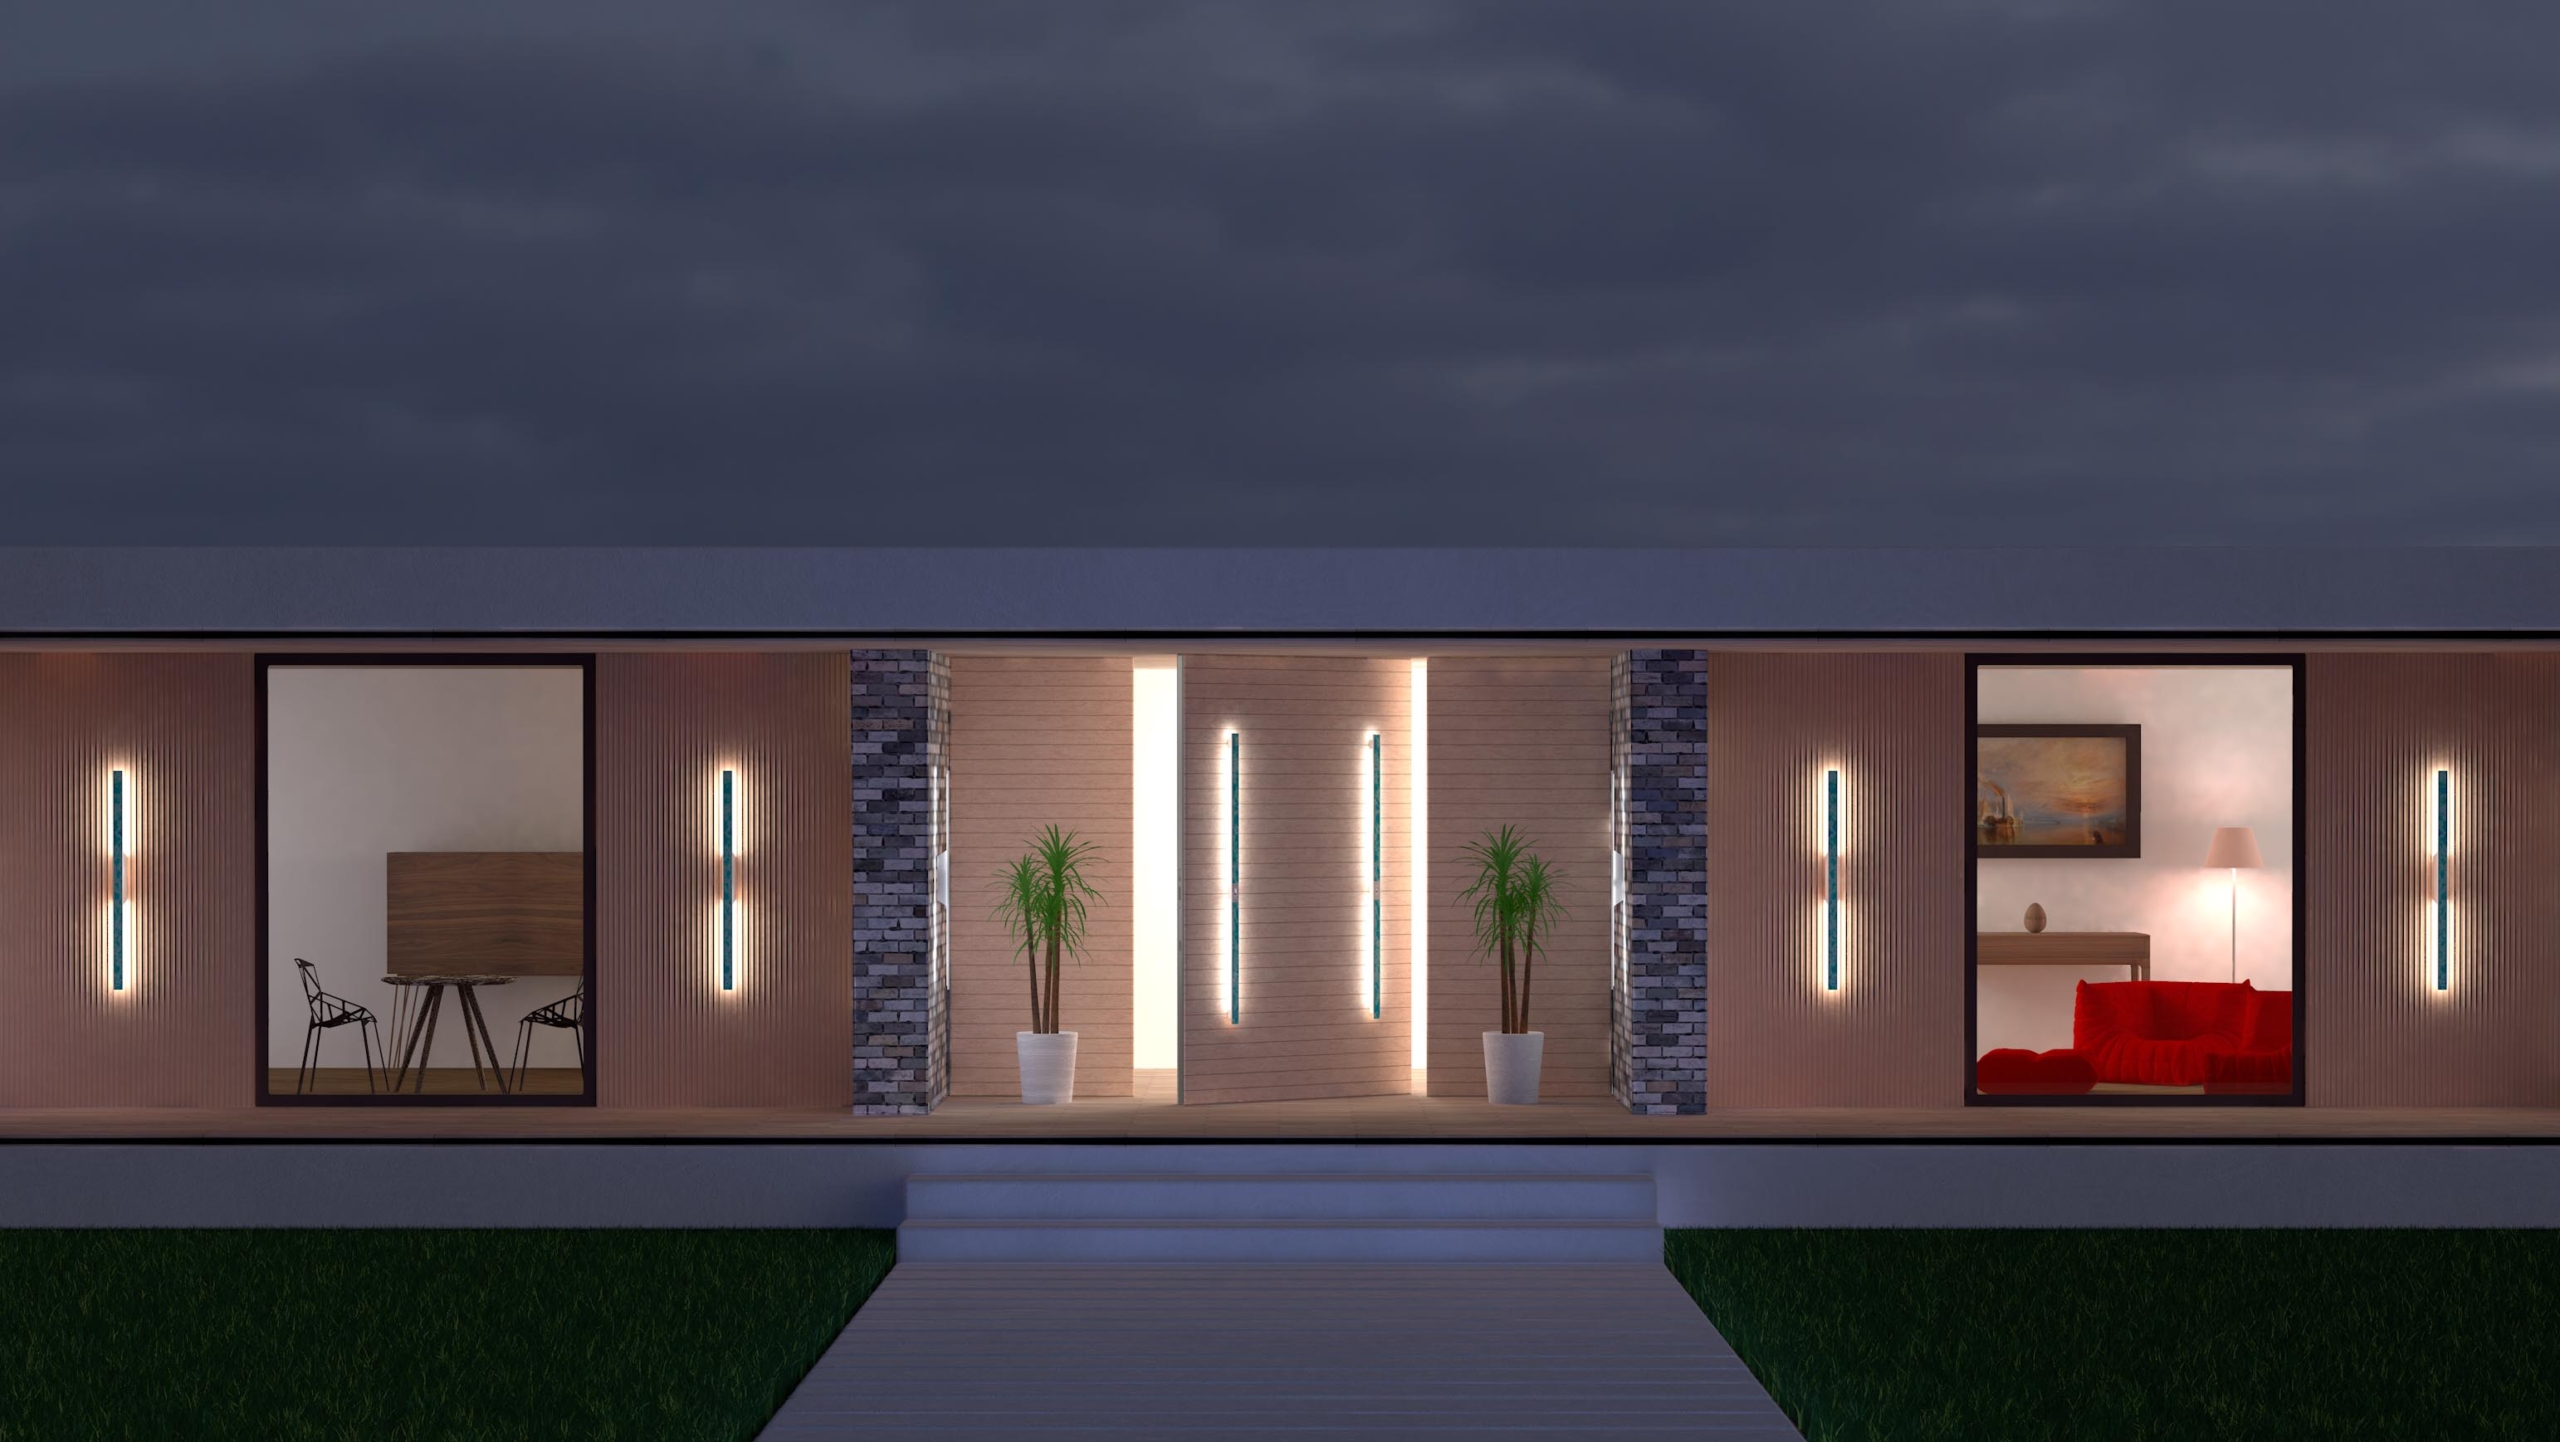 Ambientalna LED svetila za fasado hiše - Ambient LED lights for house facade - Griffing